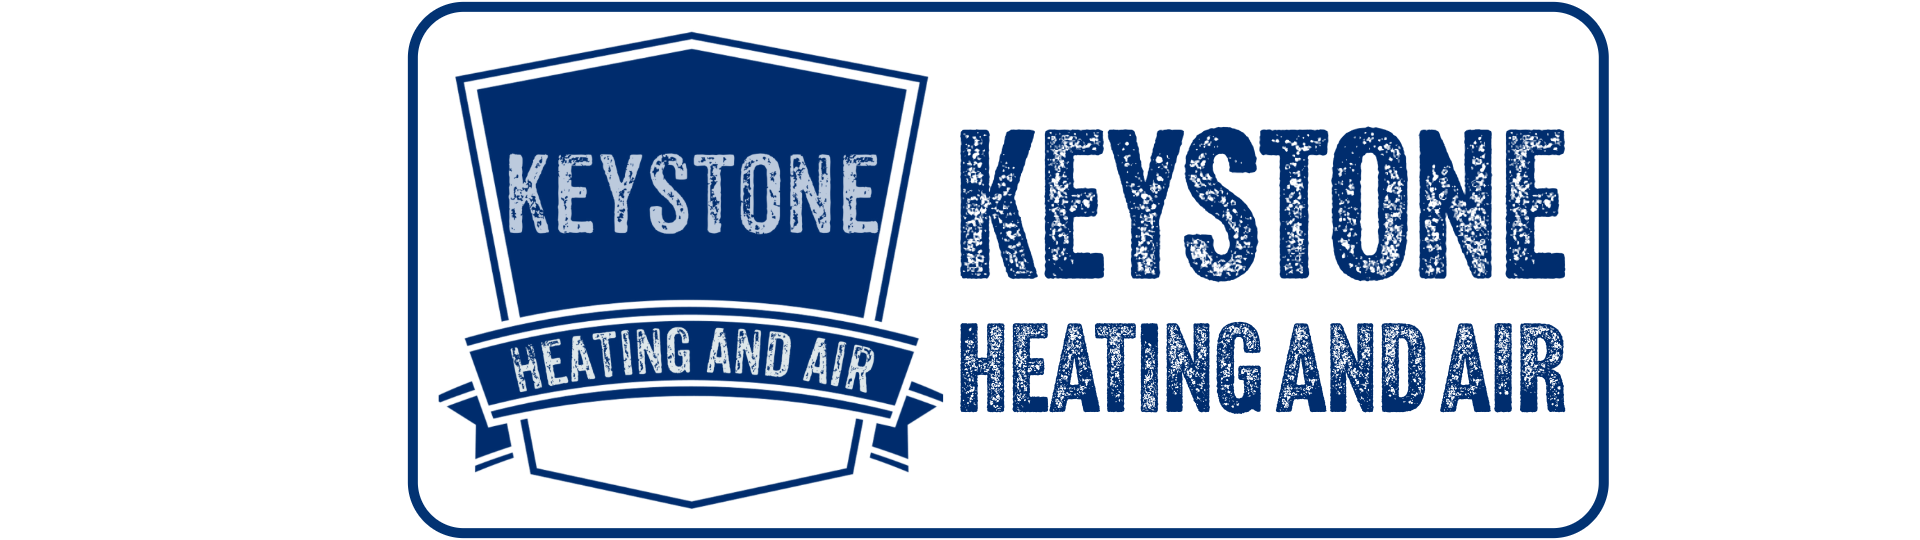 keystone heating and air business logo